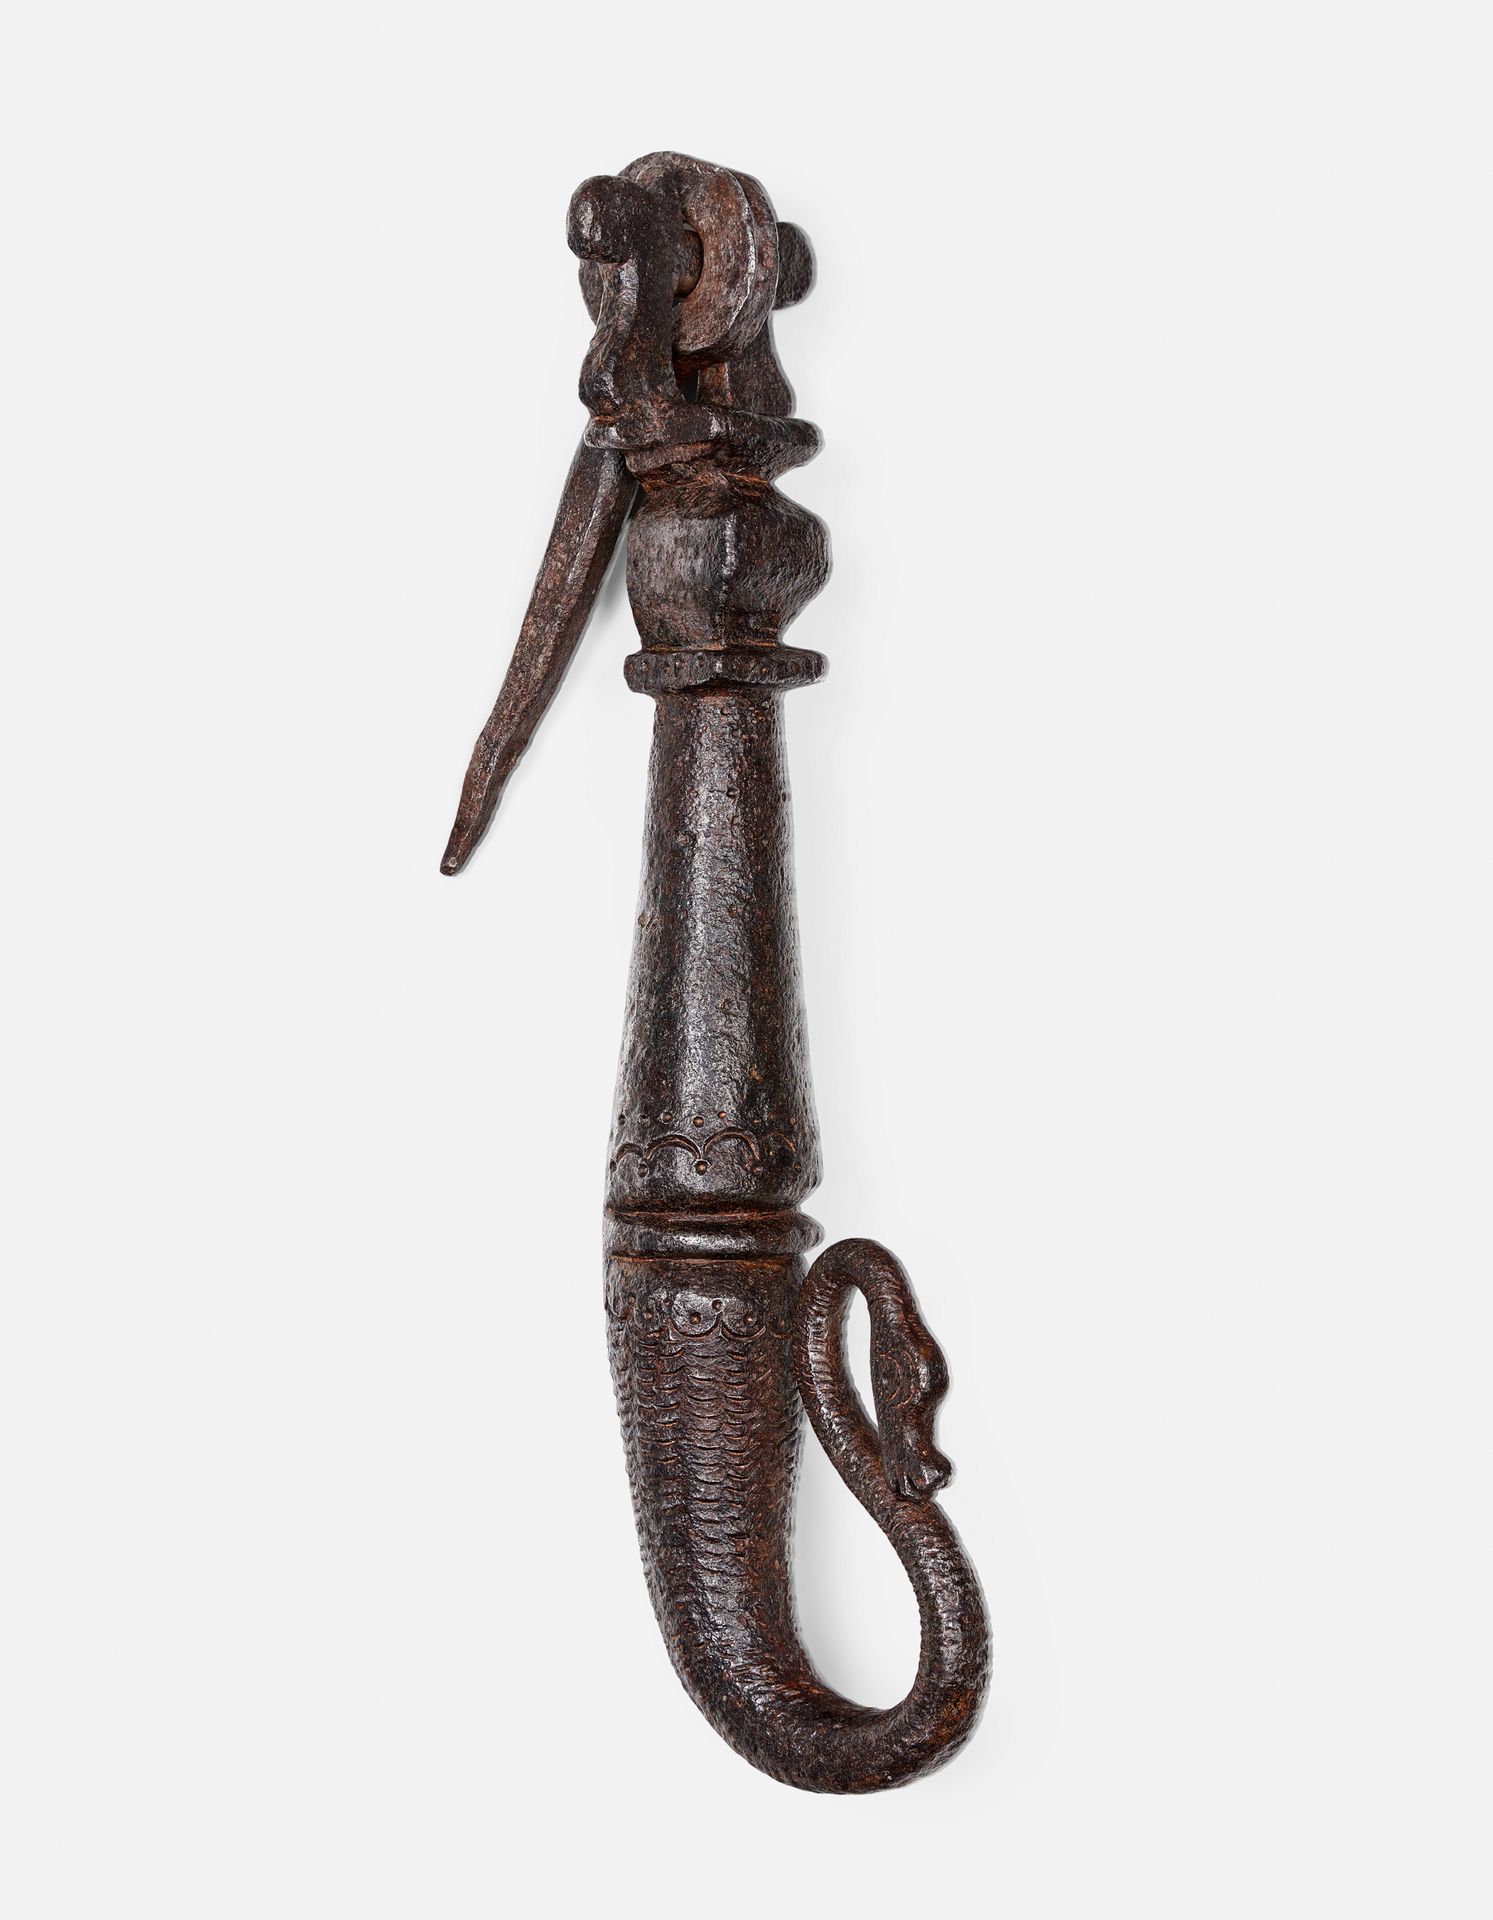 Null 门锁

西班牙，17世纪

铸铁，有蛇和栏杆的装饰。

高：33厘米